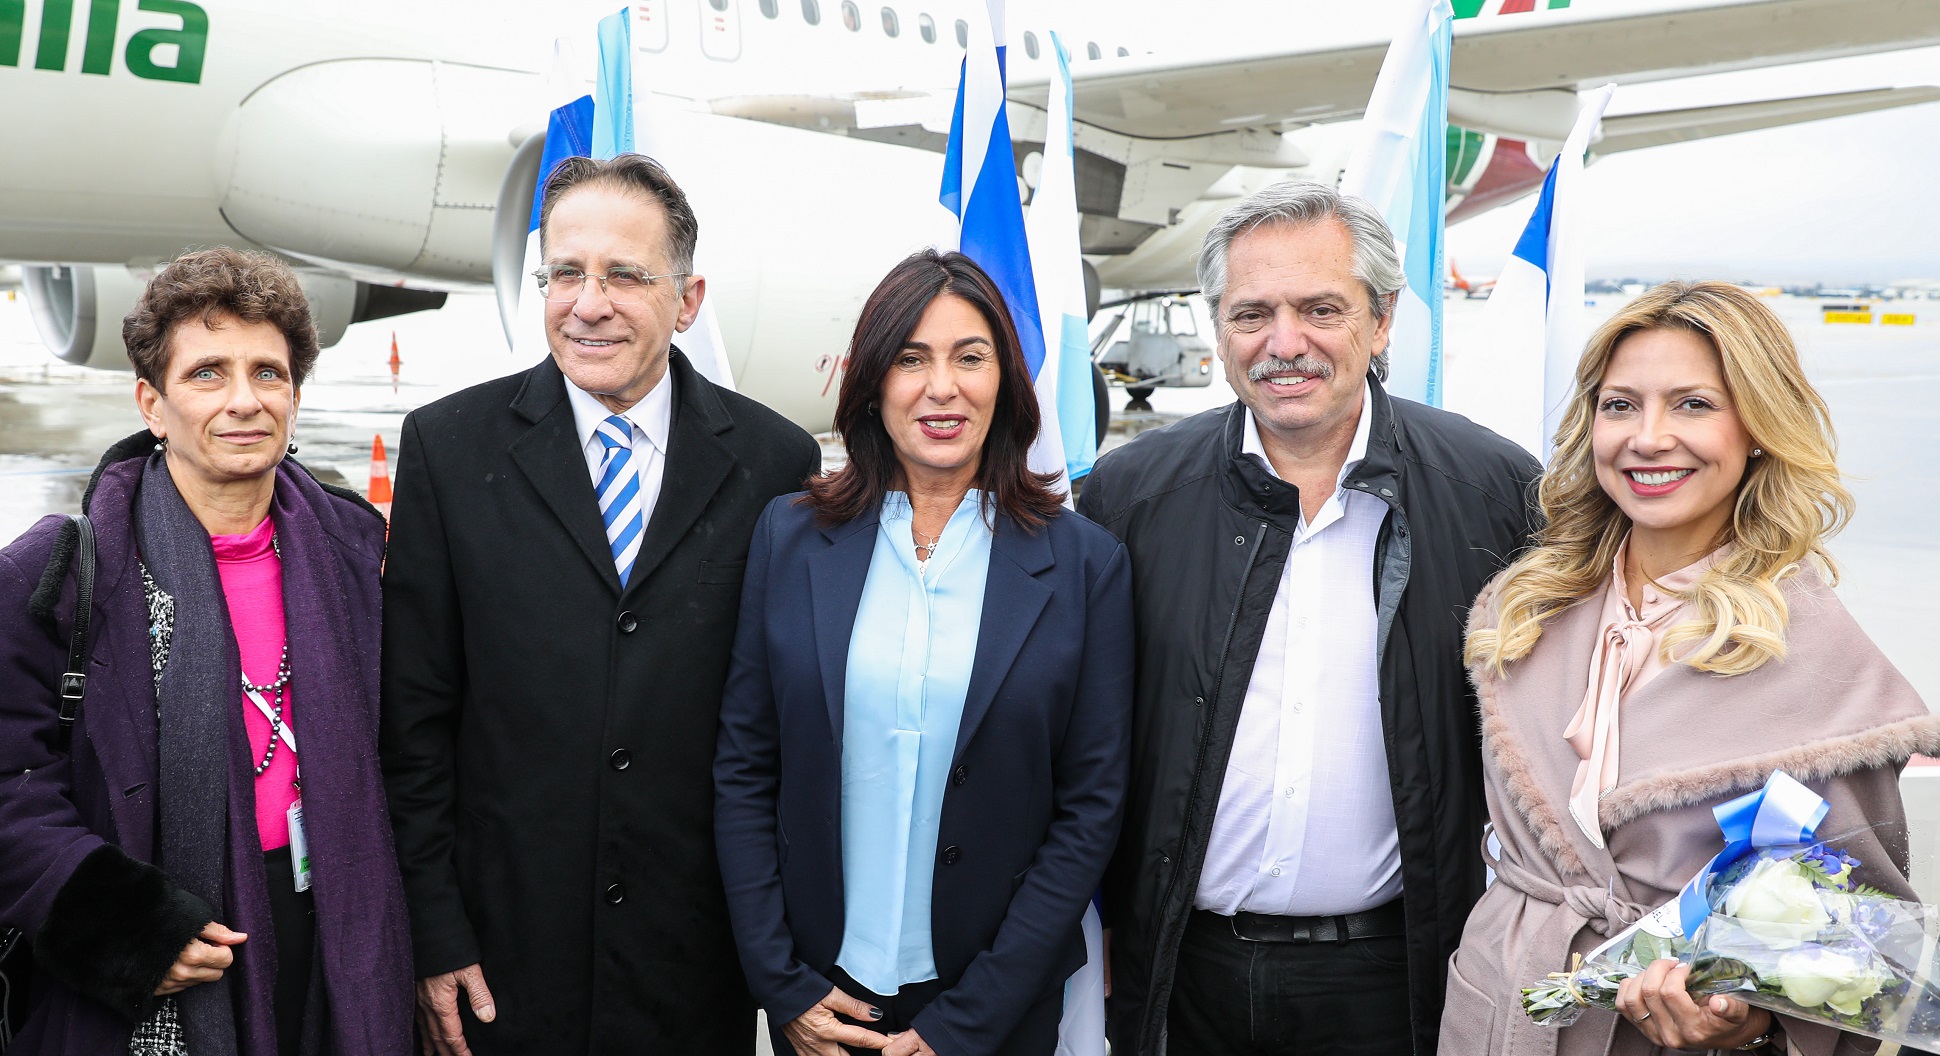 El presidente Alberto Fernández llegó a Israel